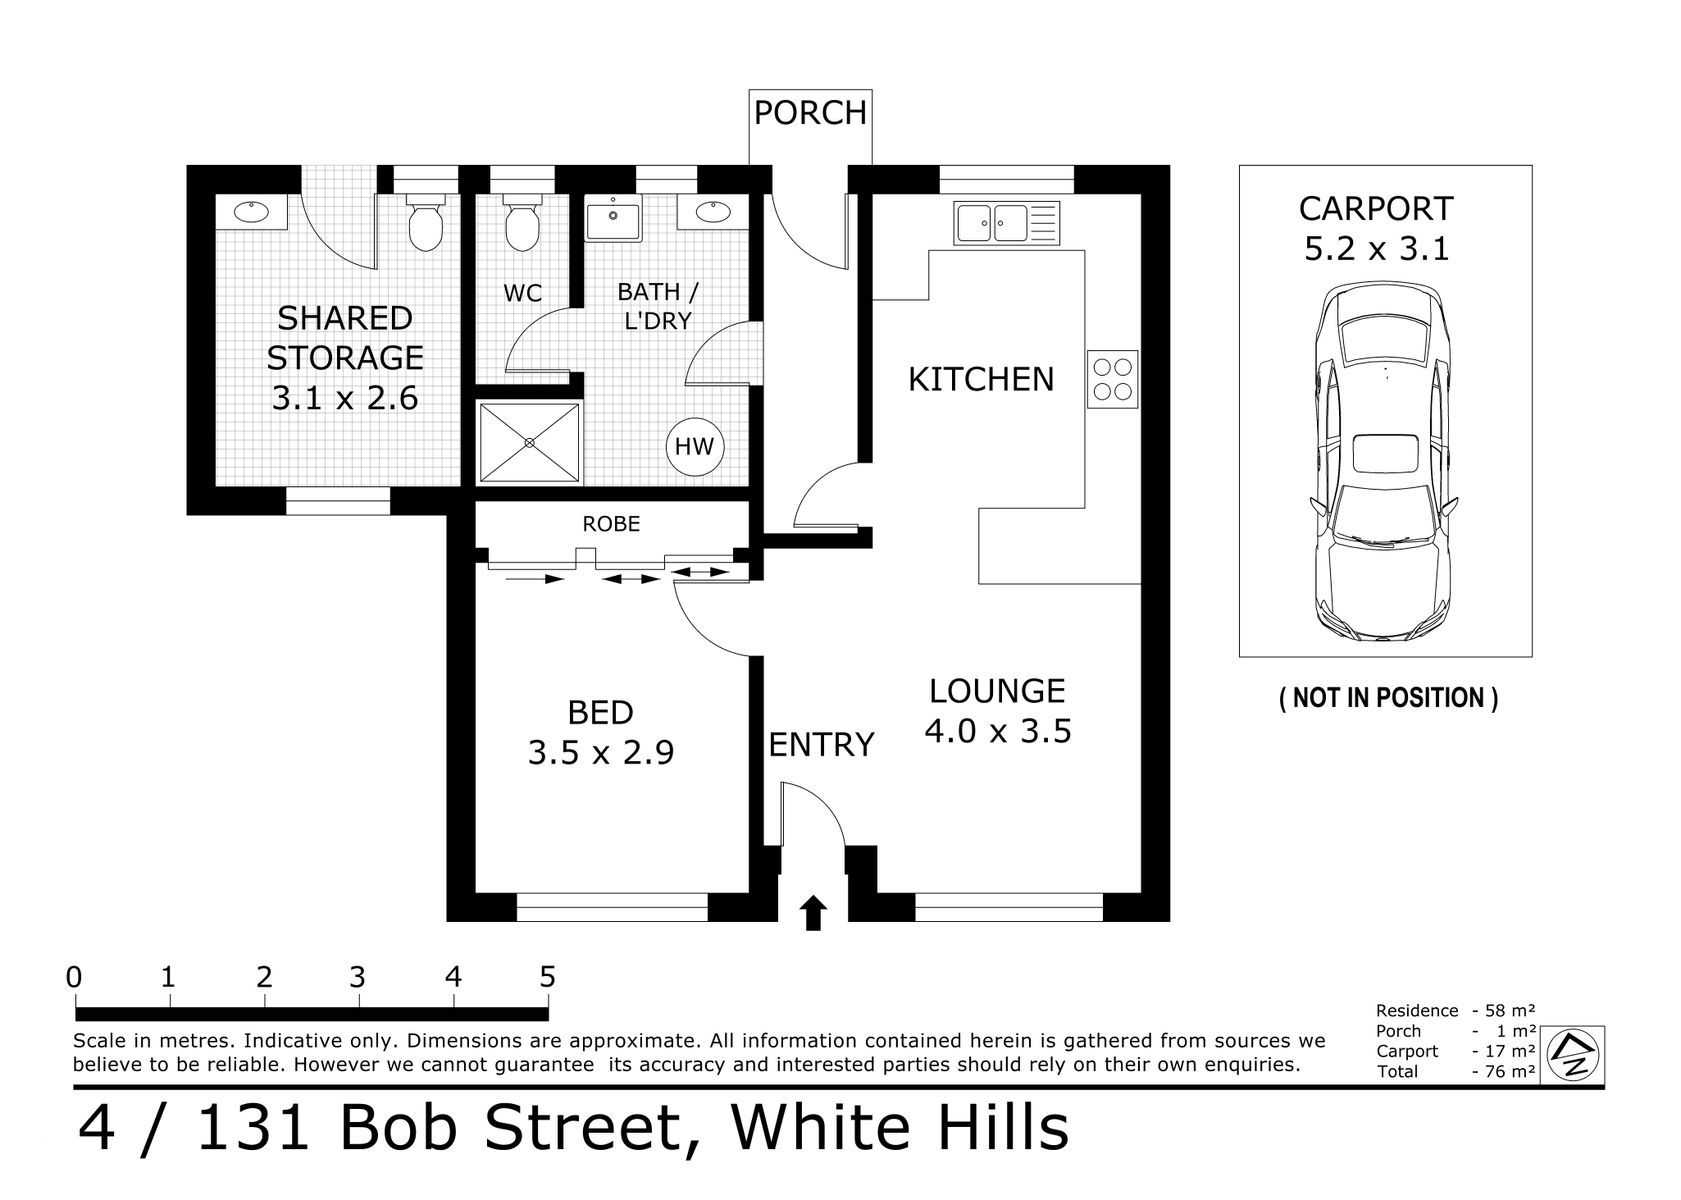 4 131 Bob Street White Hills Highres